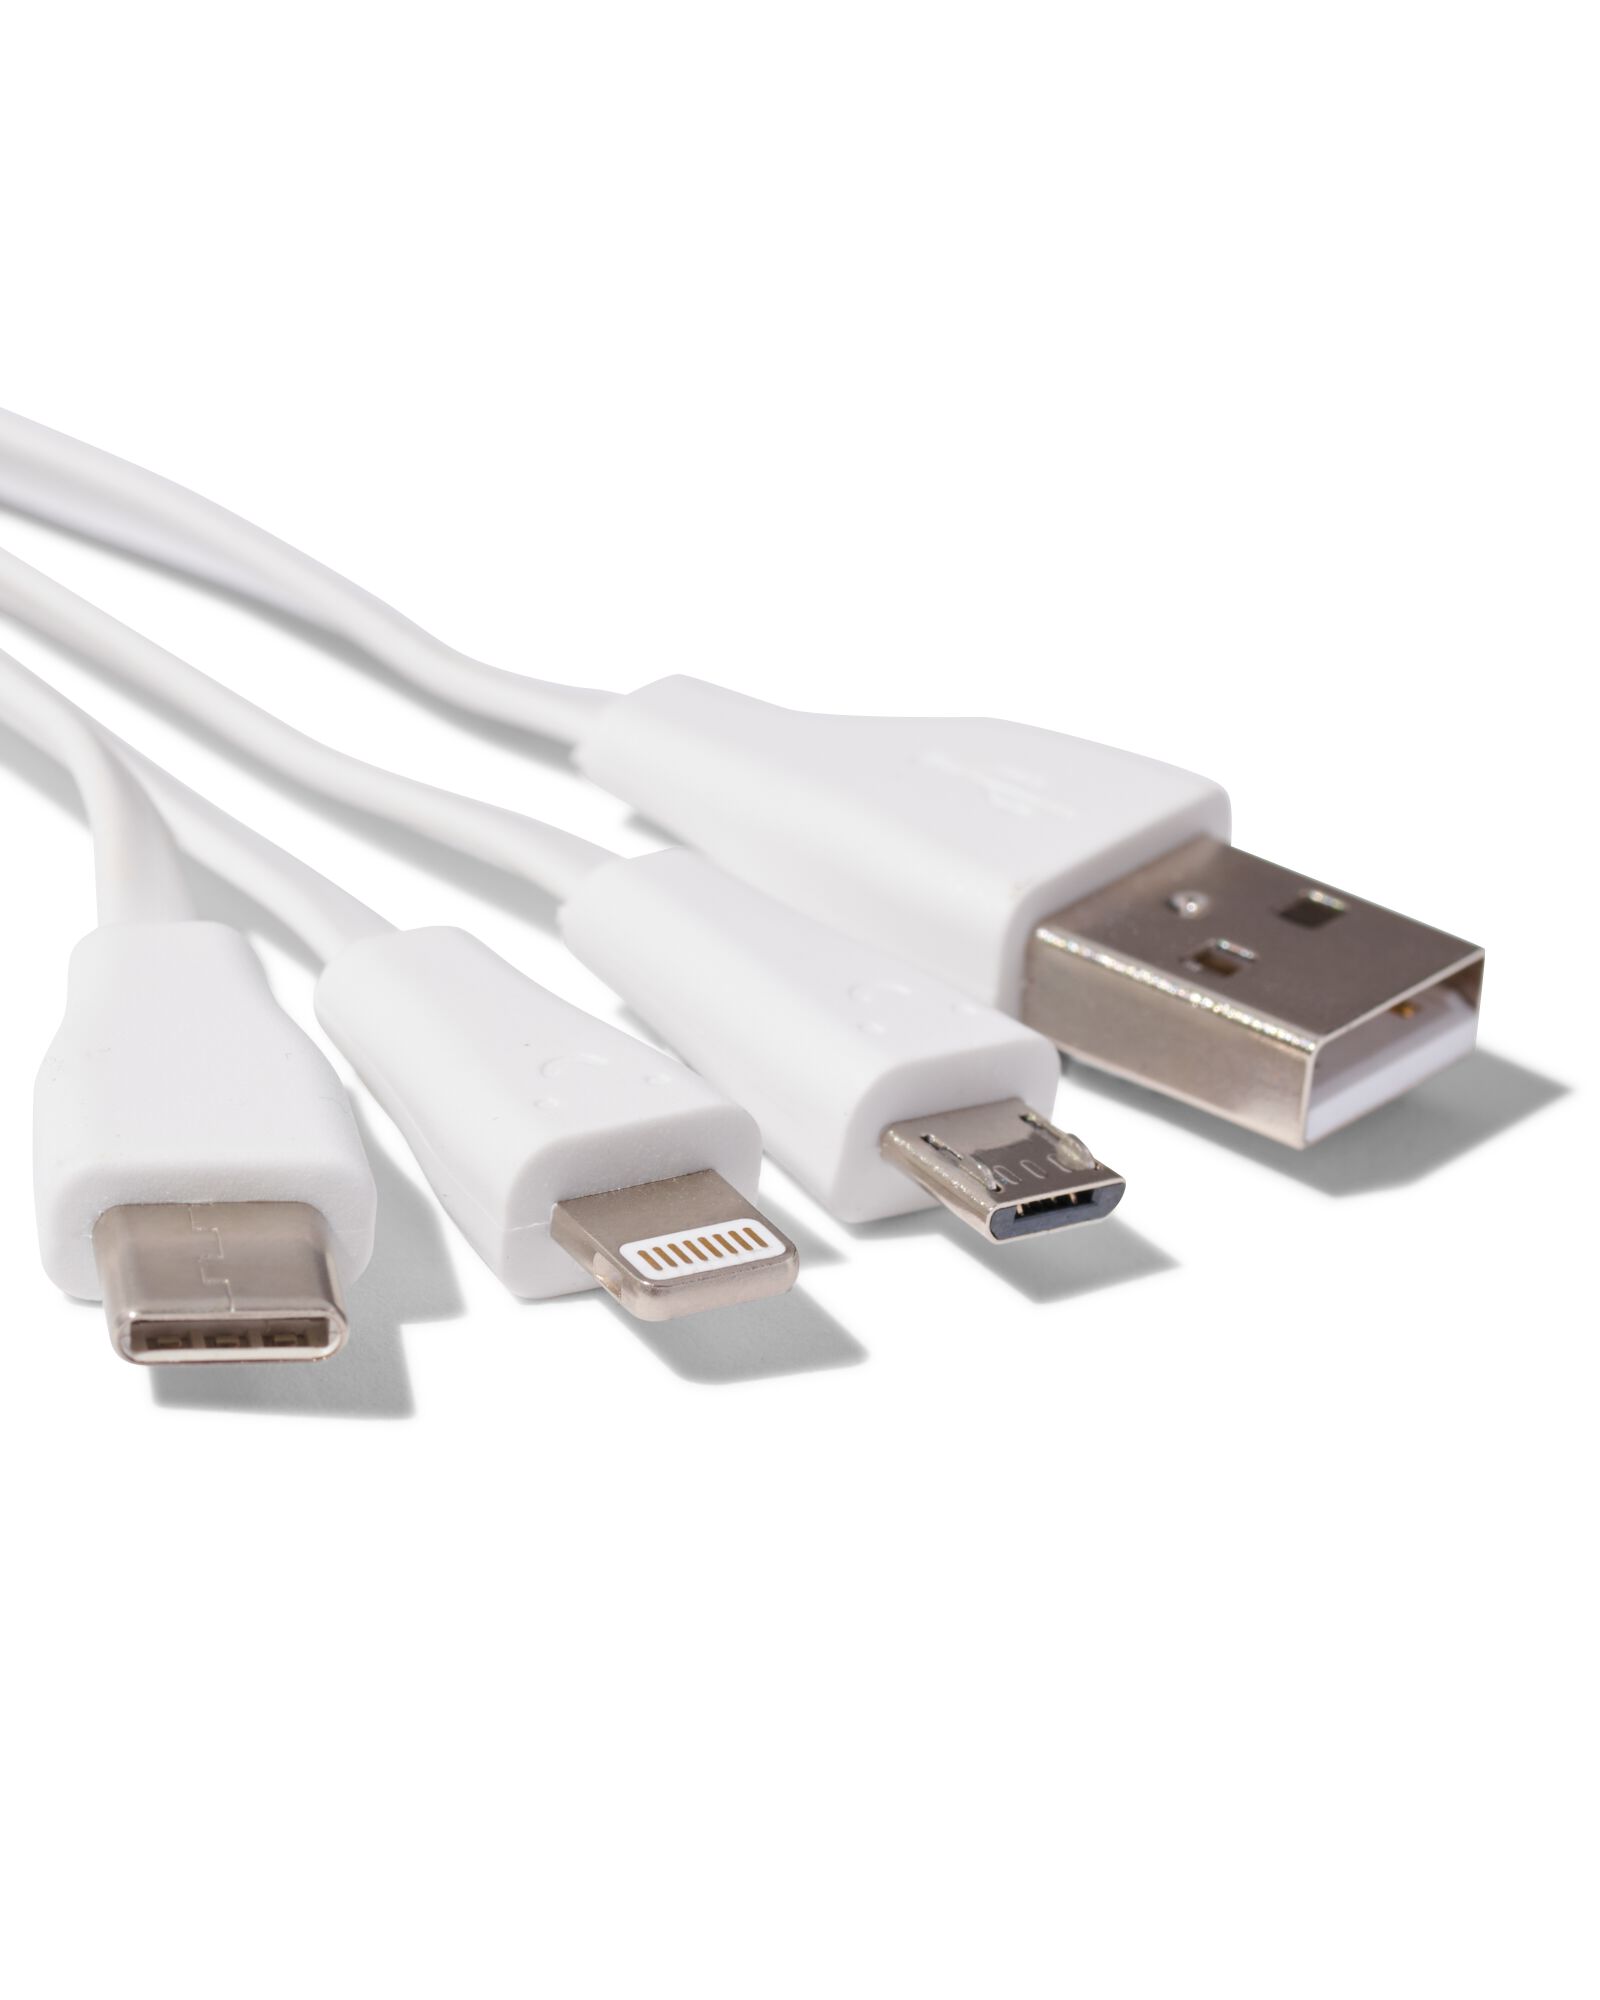 4-in-1 USB laadkabel, USB-C, micro USB & 8 pin - 39630063 - HEMA